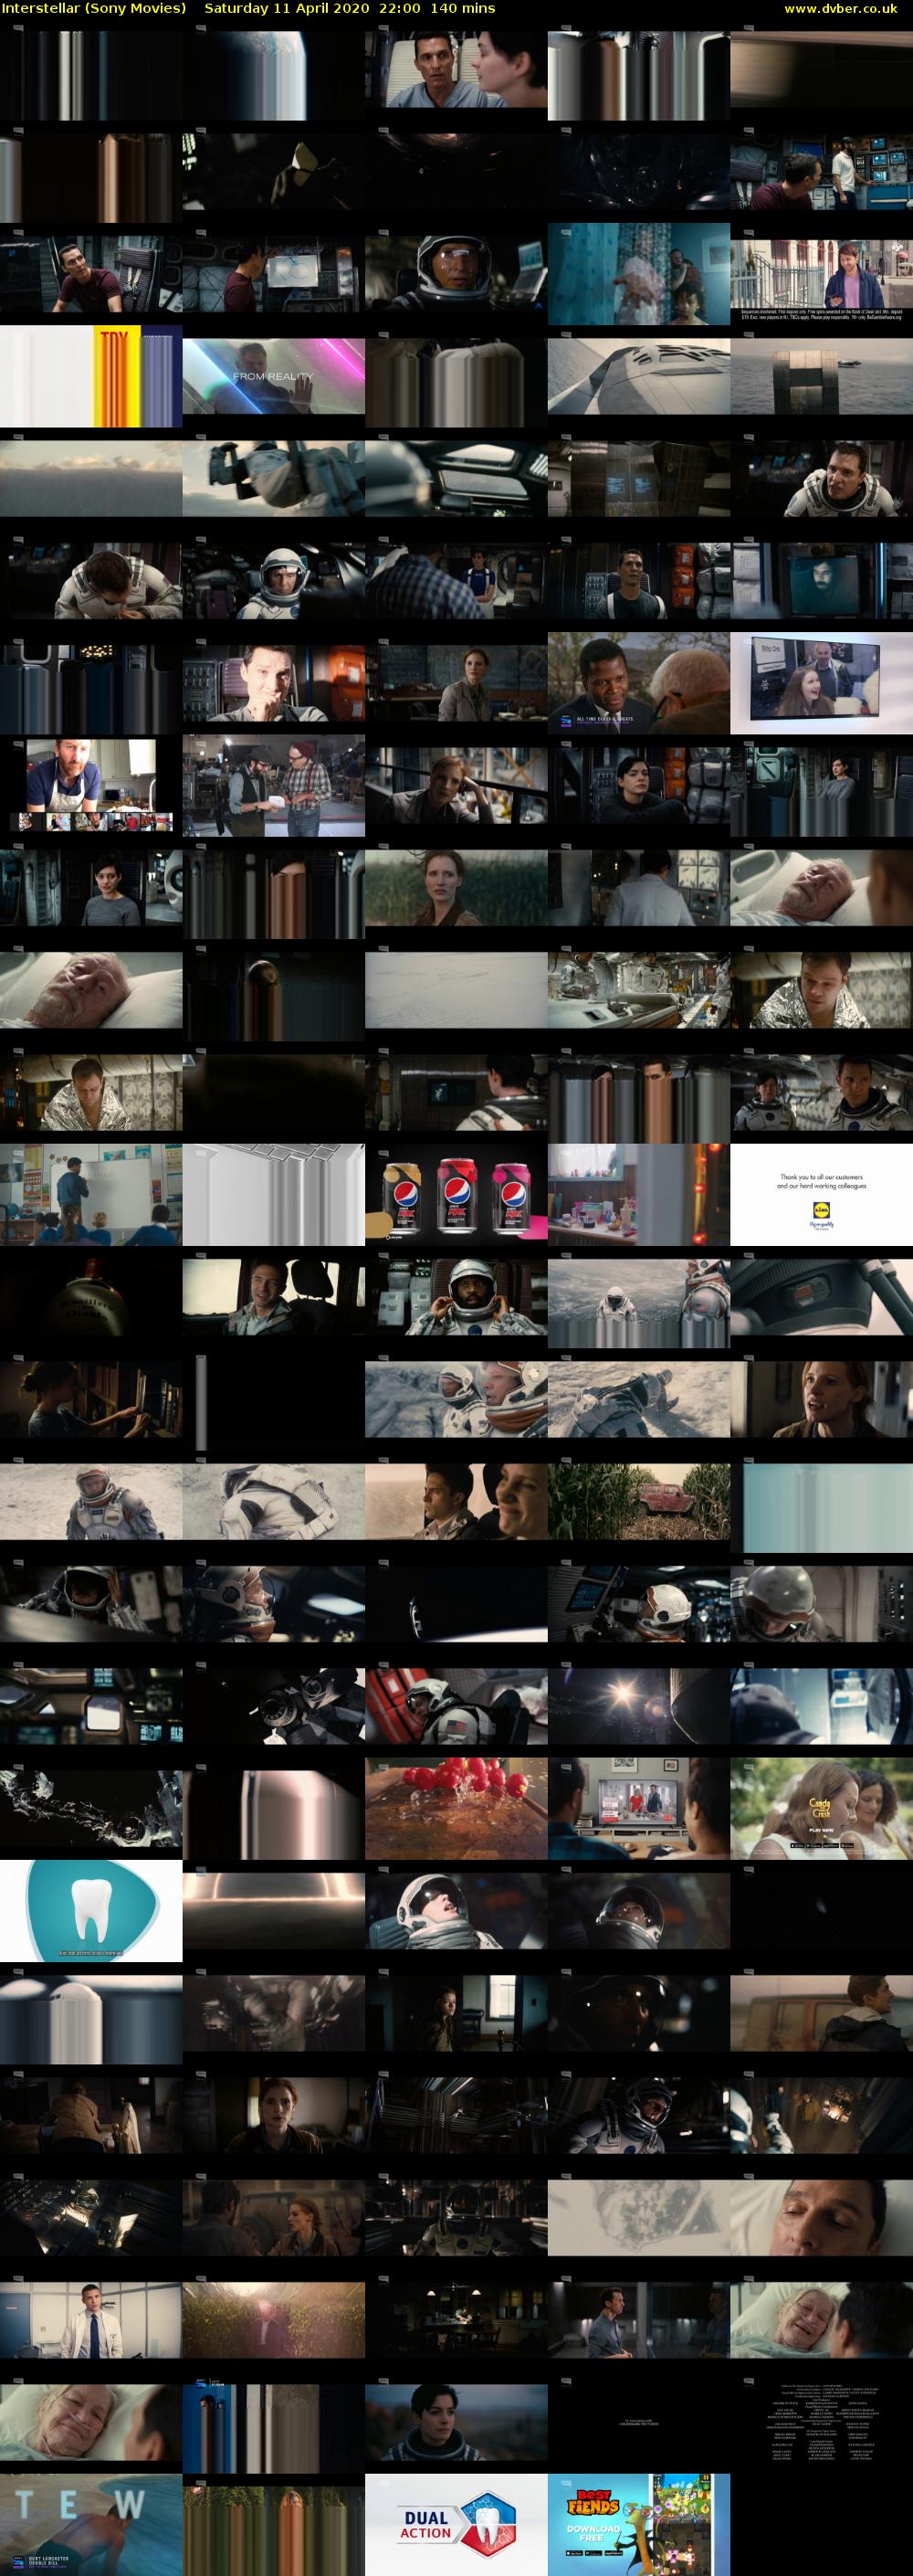 Interstellar (Sony Movies) Saturday 11 April 2020 22:00 - 00:20